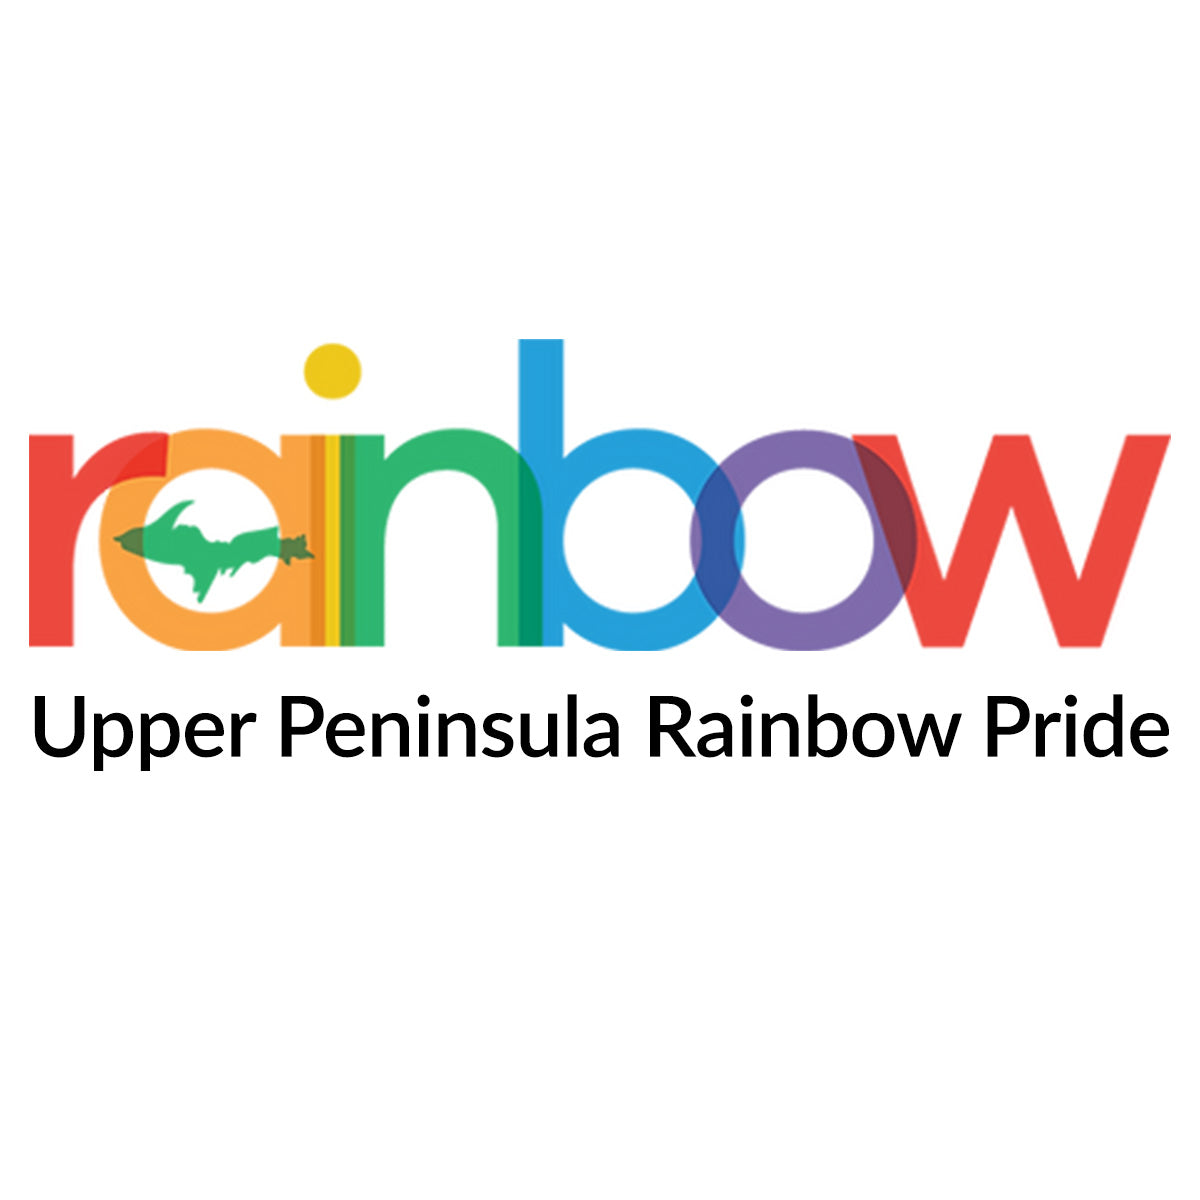 Upper Peninsula Rainbow Pride